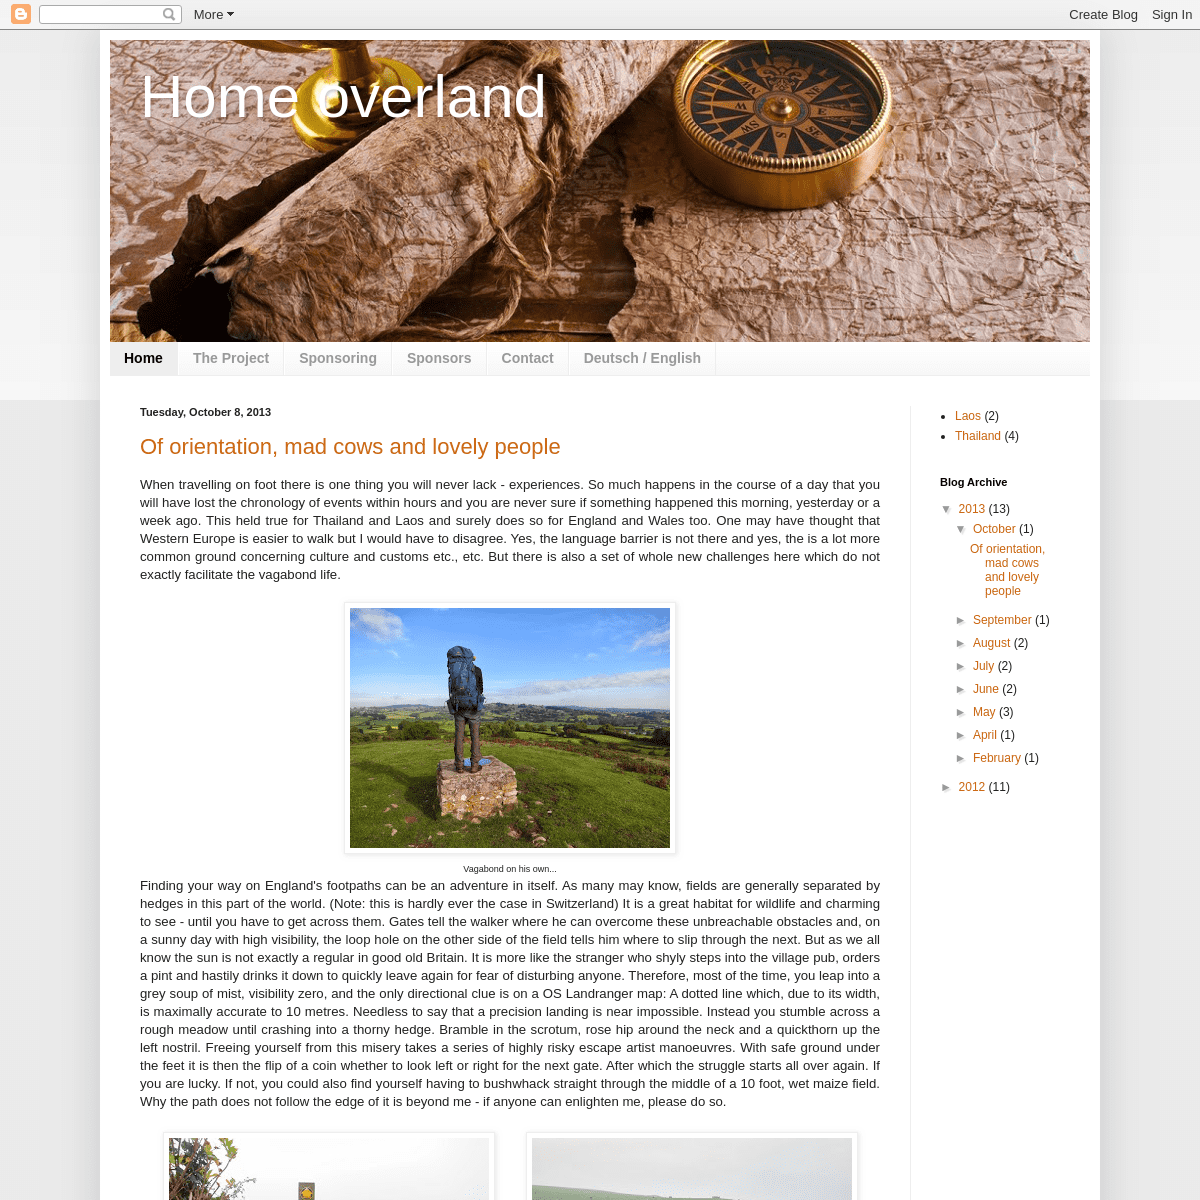 A complete backup of homeoverland.blogspot.com